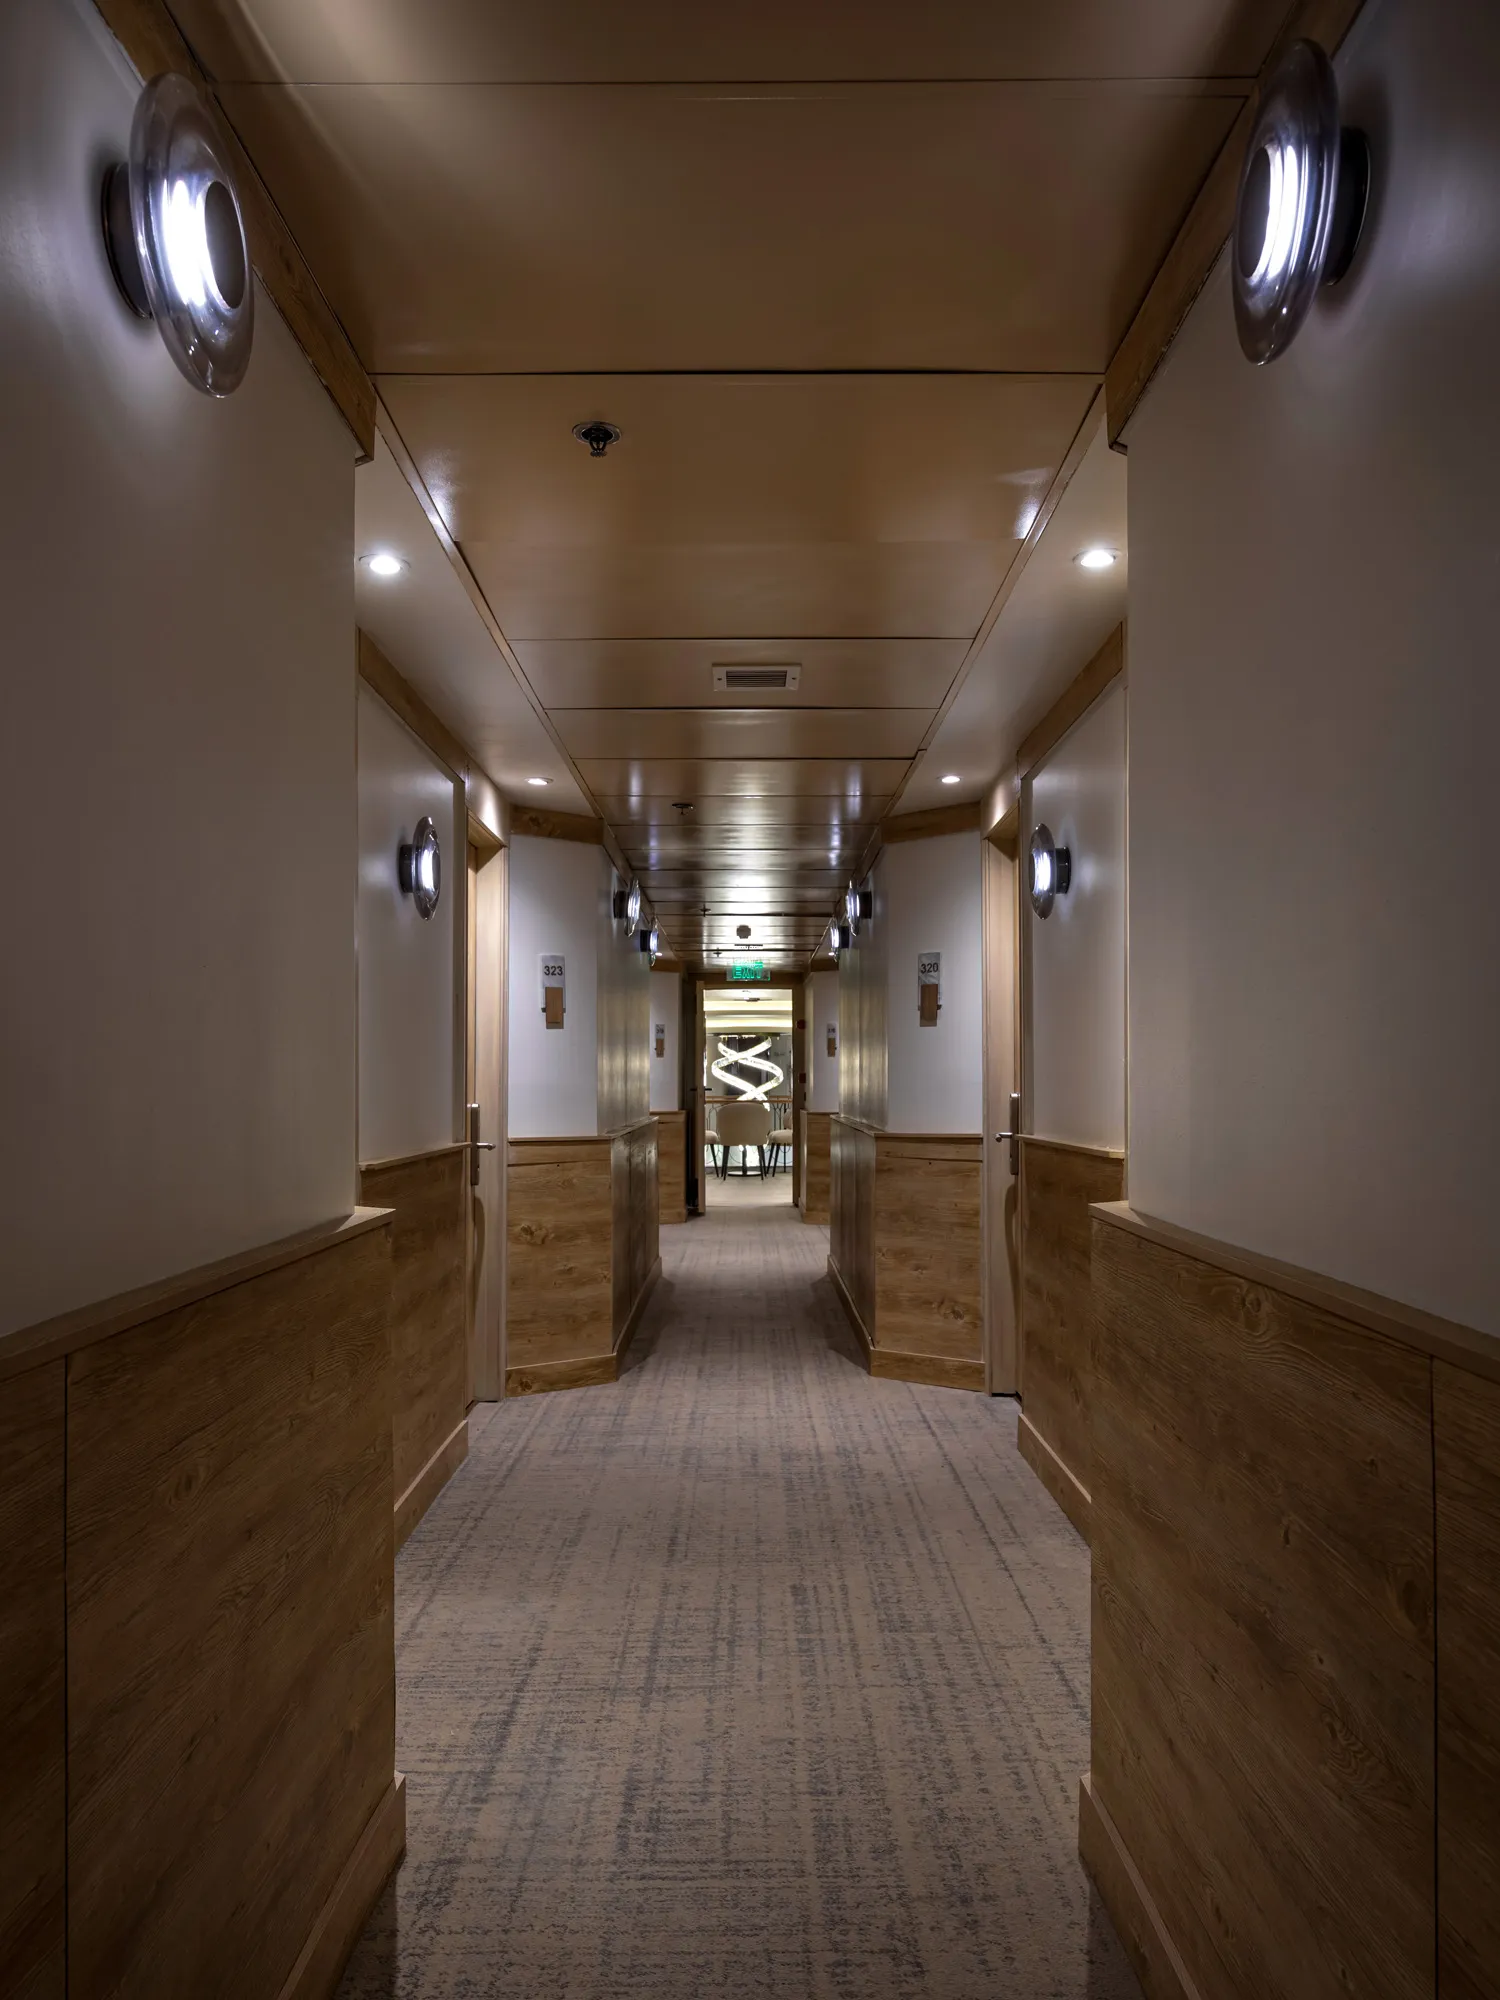 MS Grand Mandarin nile cruise hallway